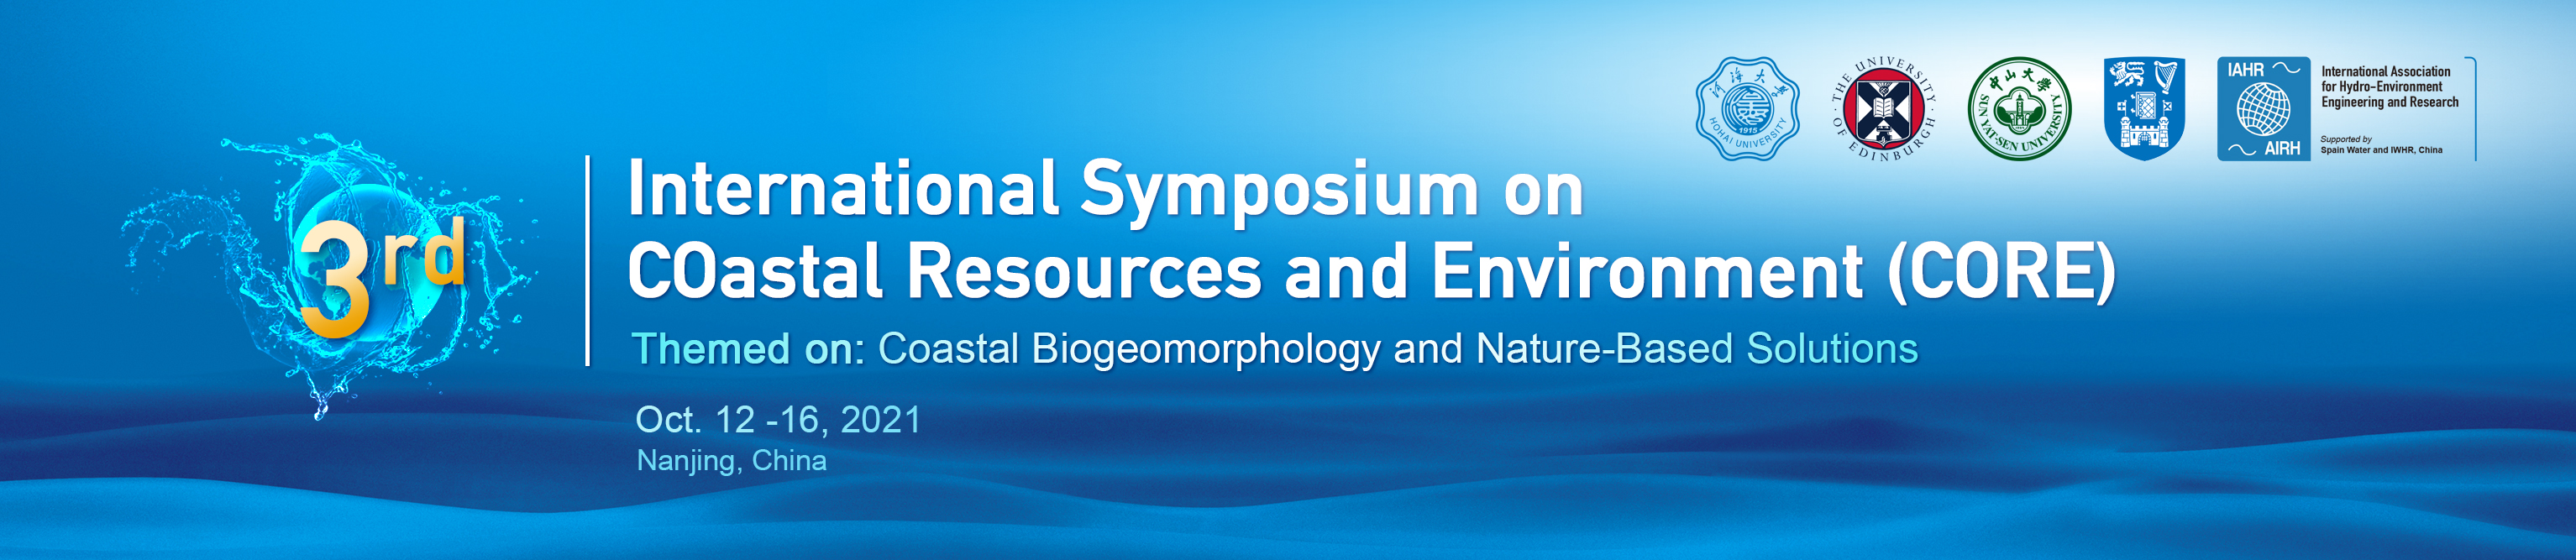 International Symposium on Coastal Resources and Environment (CORE2021)